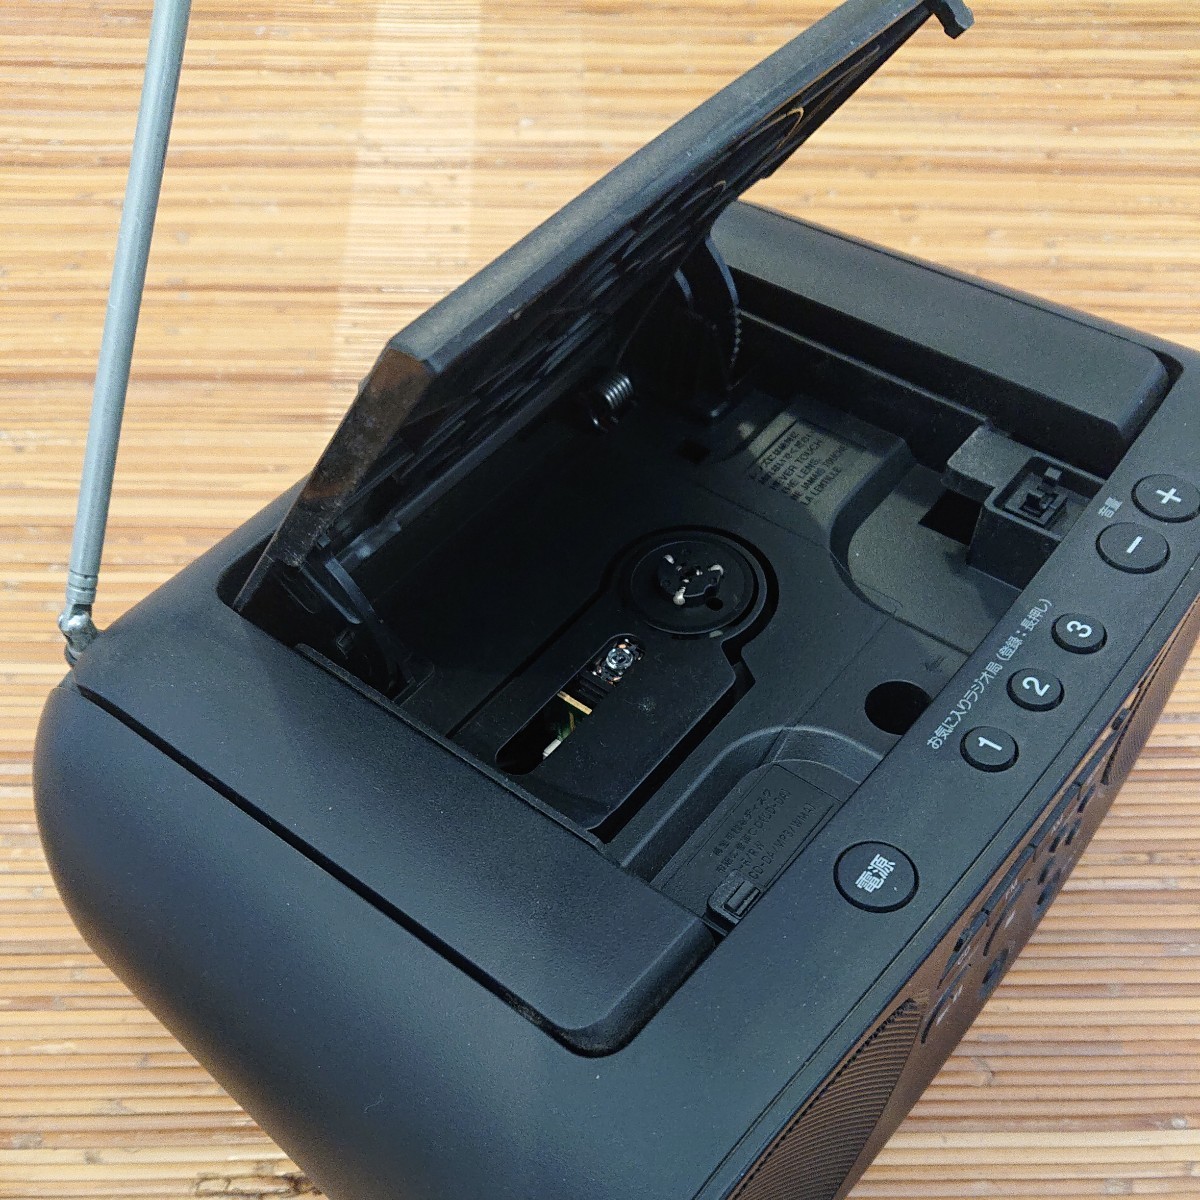 SONY CD radio ZS-S40 black CD player breakdown Sony black 